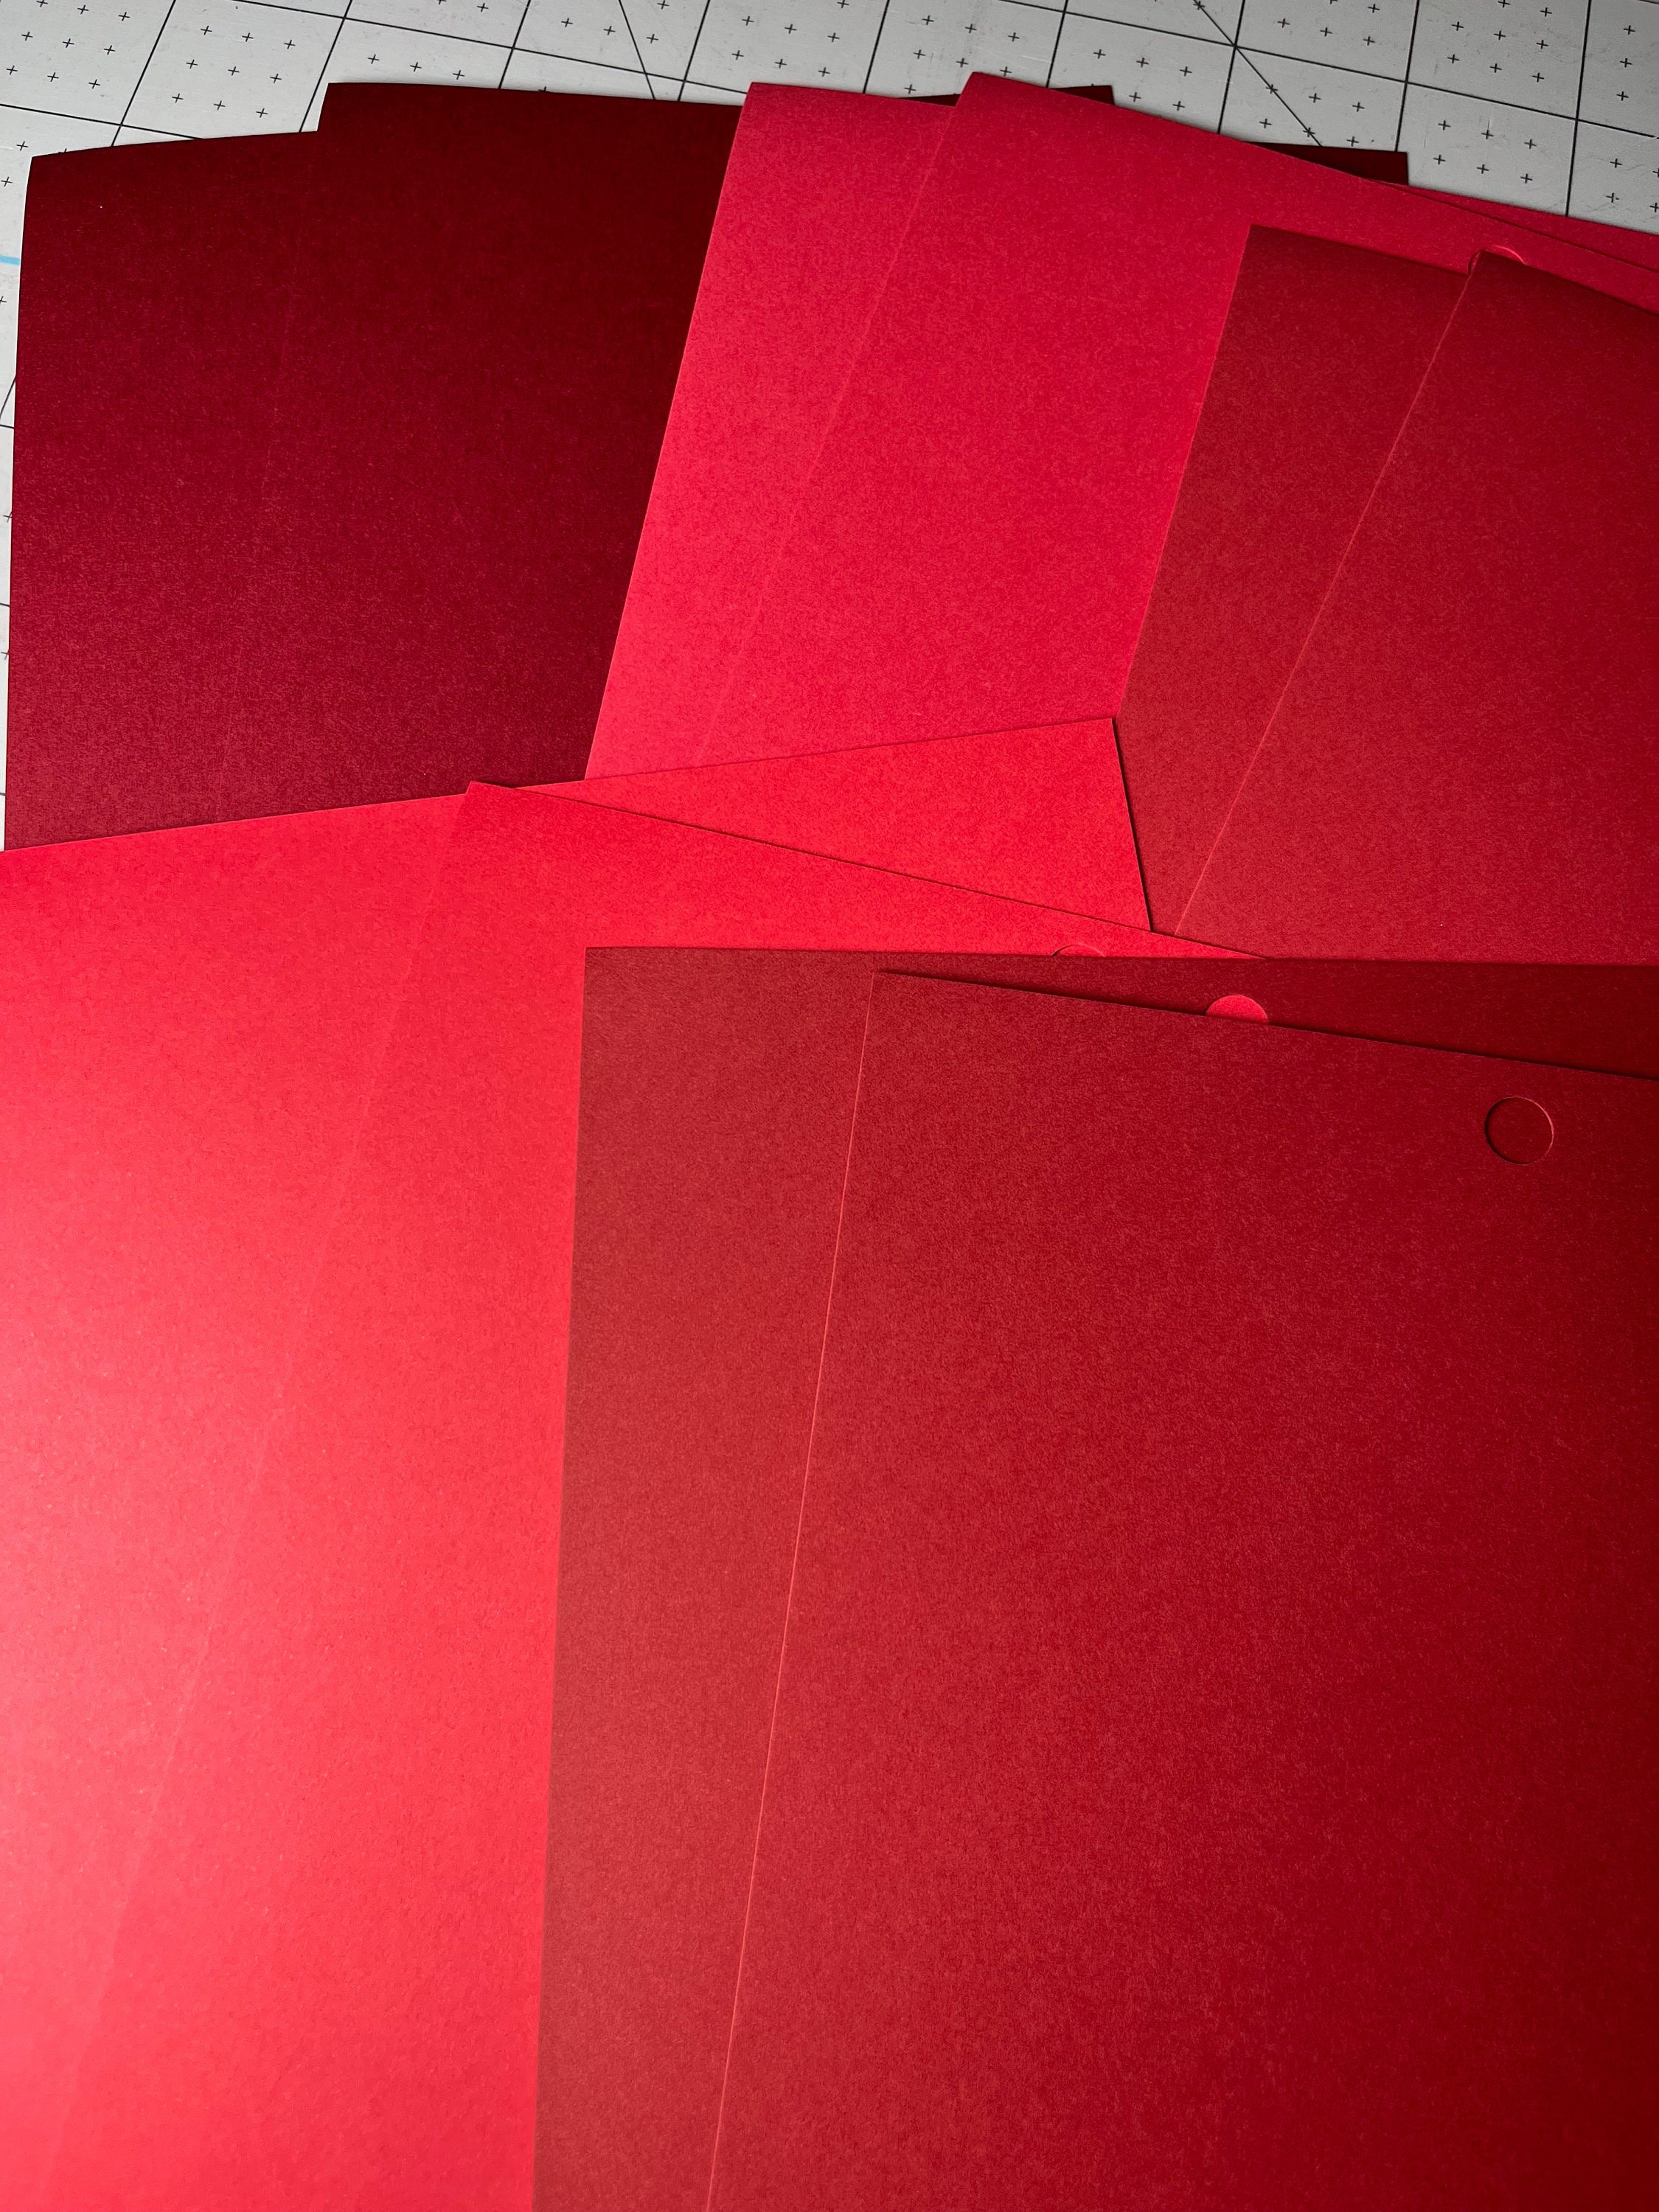 Spellbinders Color Essentials Cardstock 8.5x11 Choose Your Color Option 